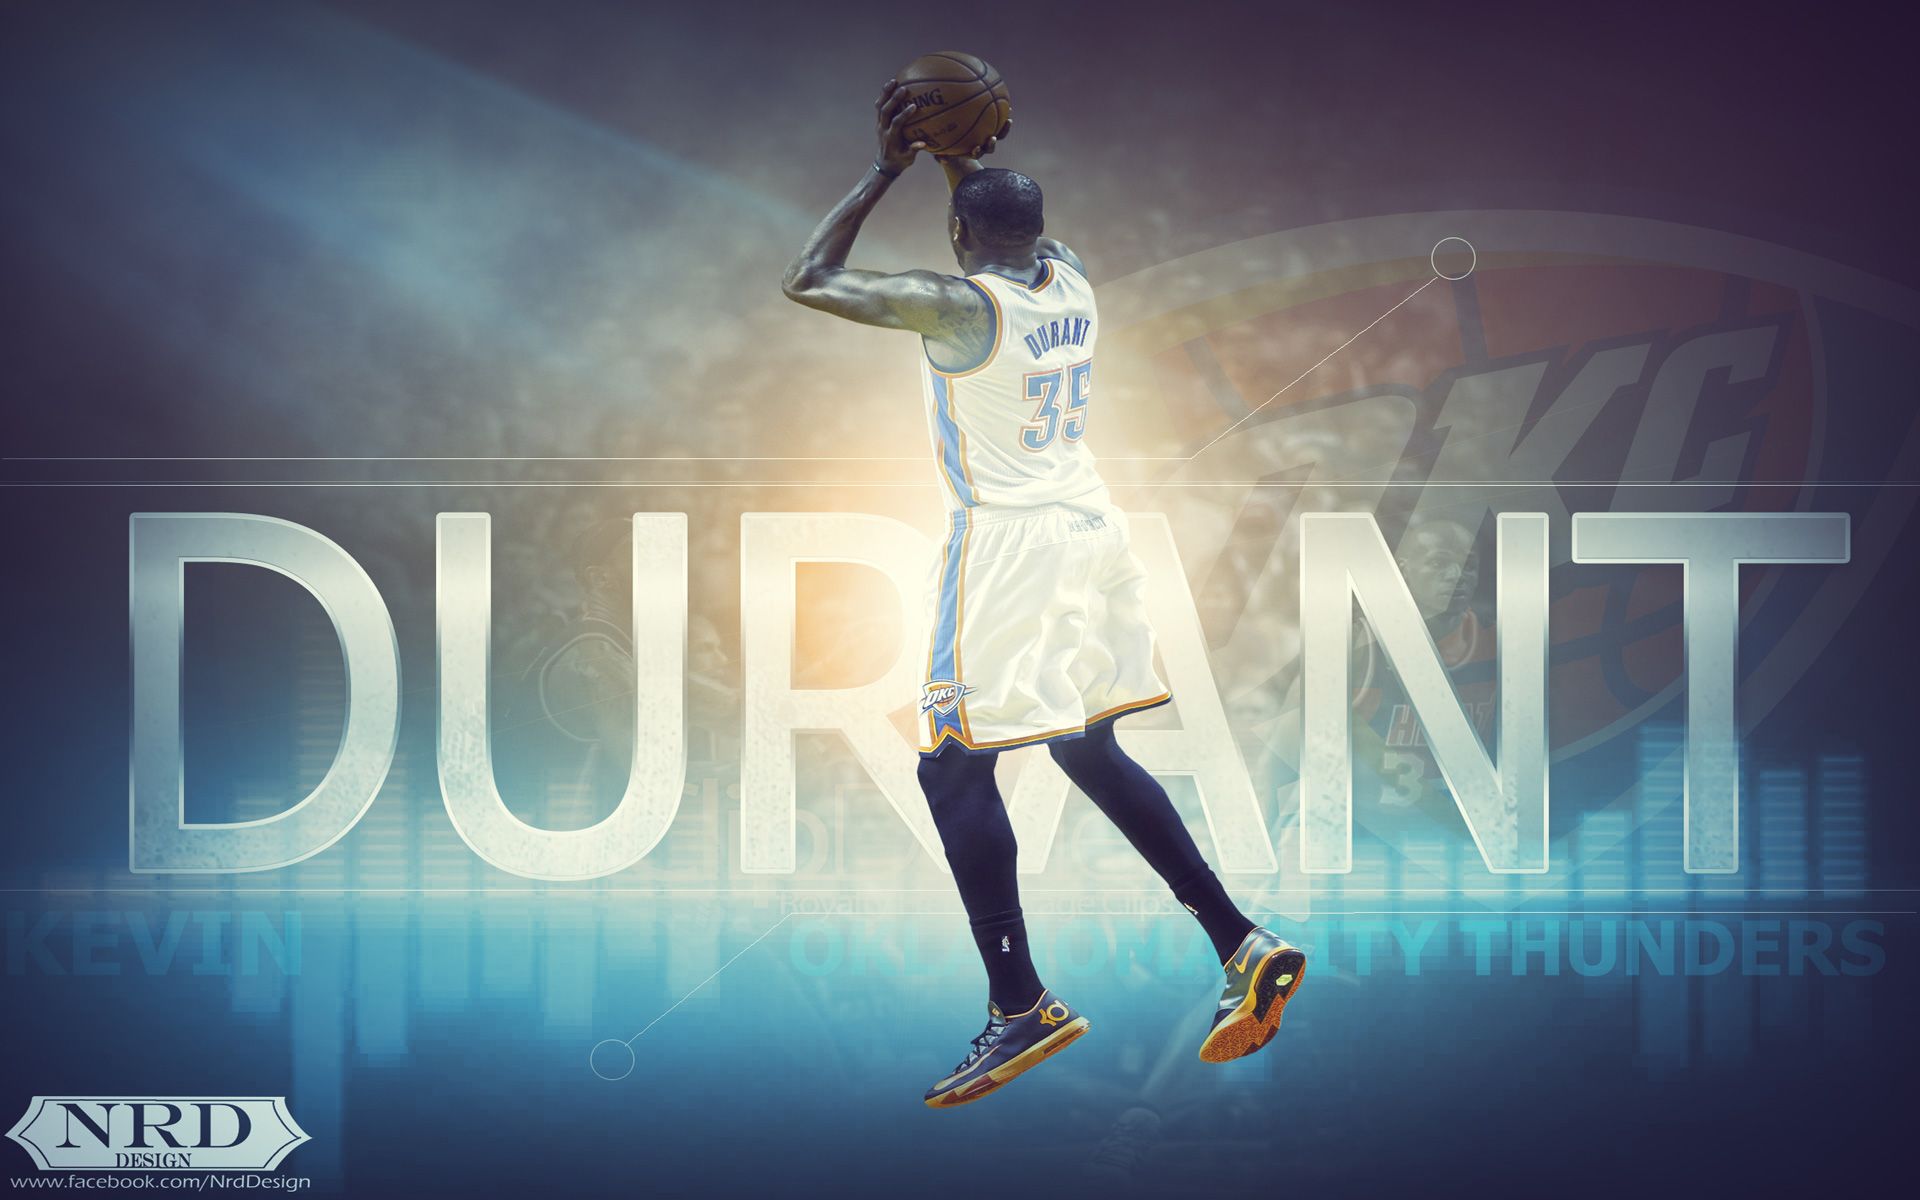 Kevin Durant Wallpapers | Basketball Wallpapers at ...